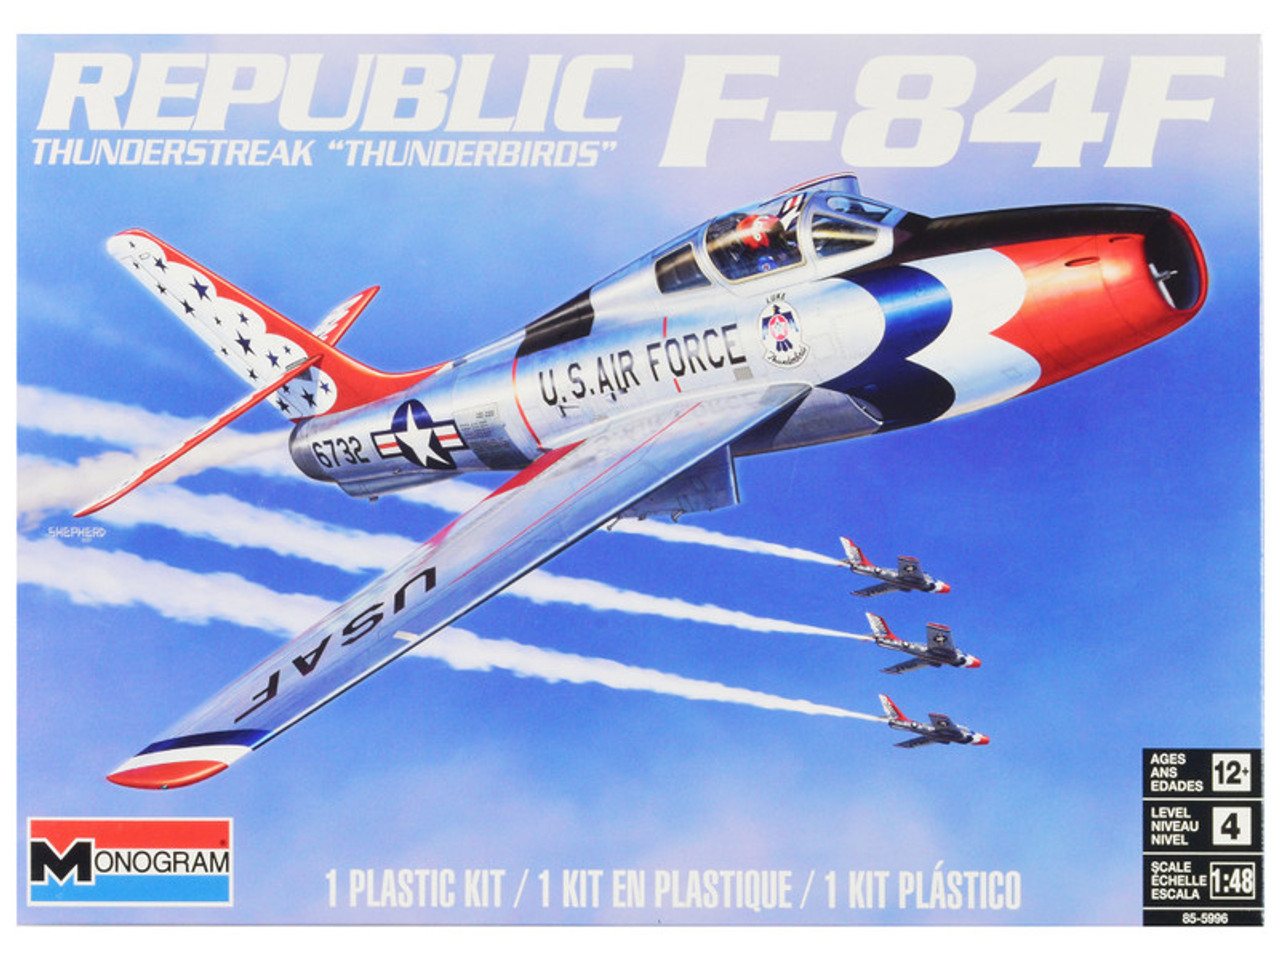 Level 4 Model Kit Republic F-84F Thunderstreak Aircraft "US Air Force Thunderbirds" "Monogram" Series 1/48 Scale Model by Revell